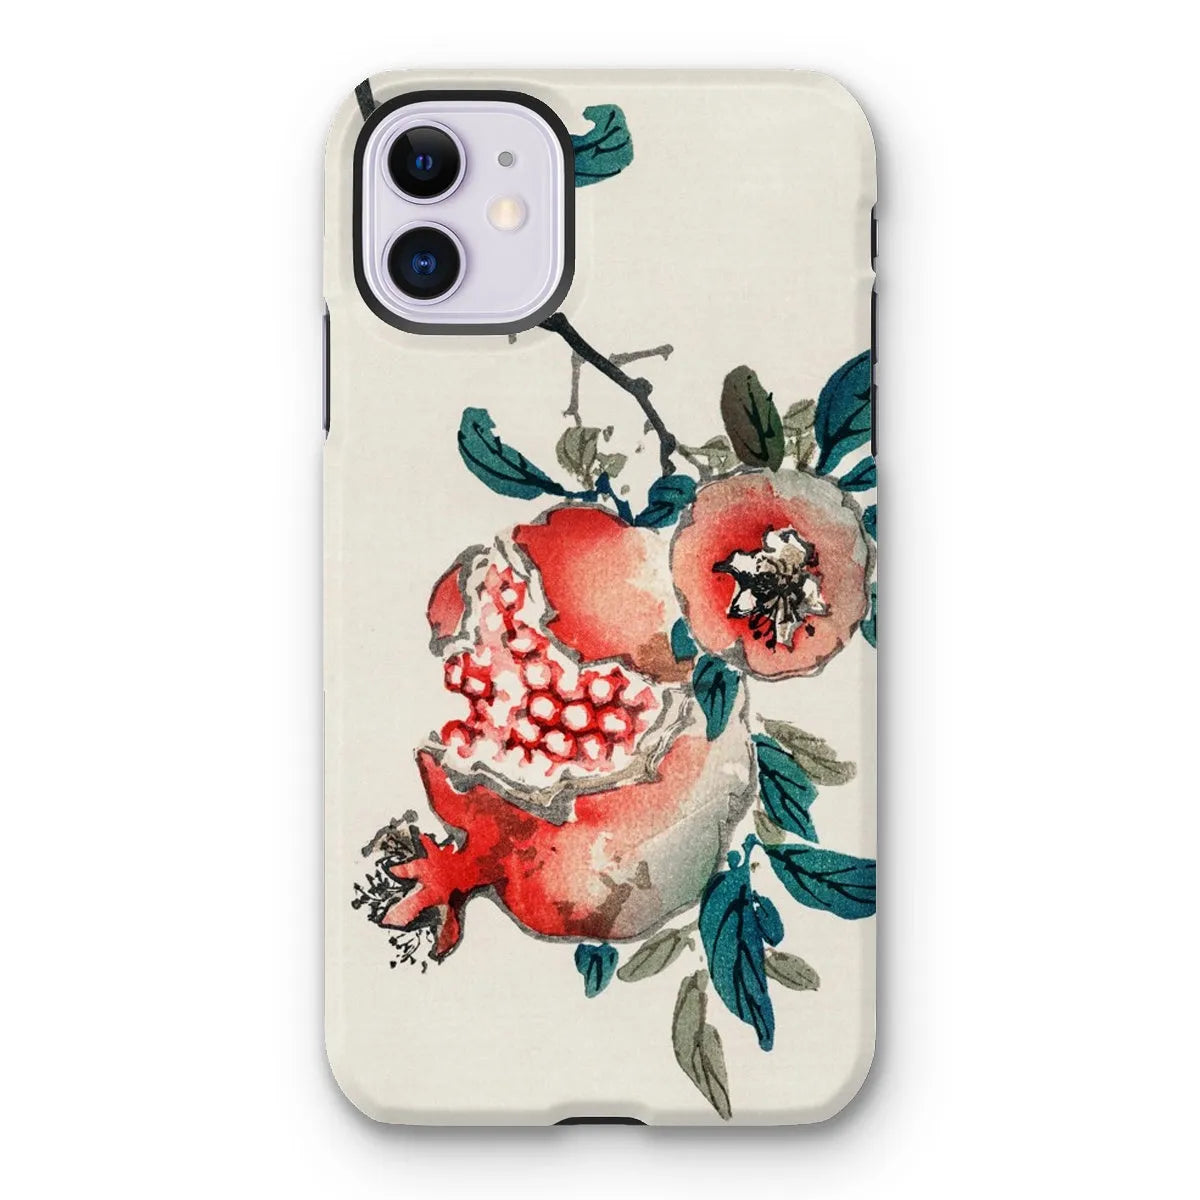 Pomegranate - Meiji Period Ukiyo-e Phone Case - Kōno Bairei - Iphone 11 / Matte - Mobile Phone Cases - Aesthetic Art